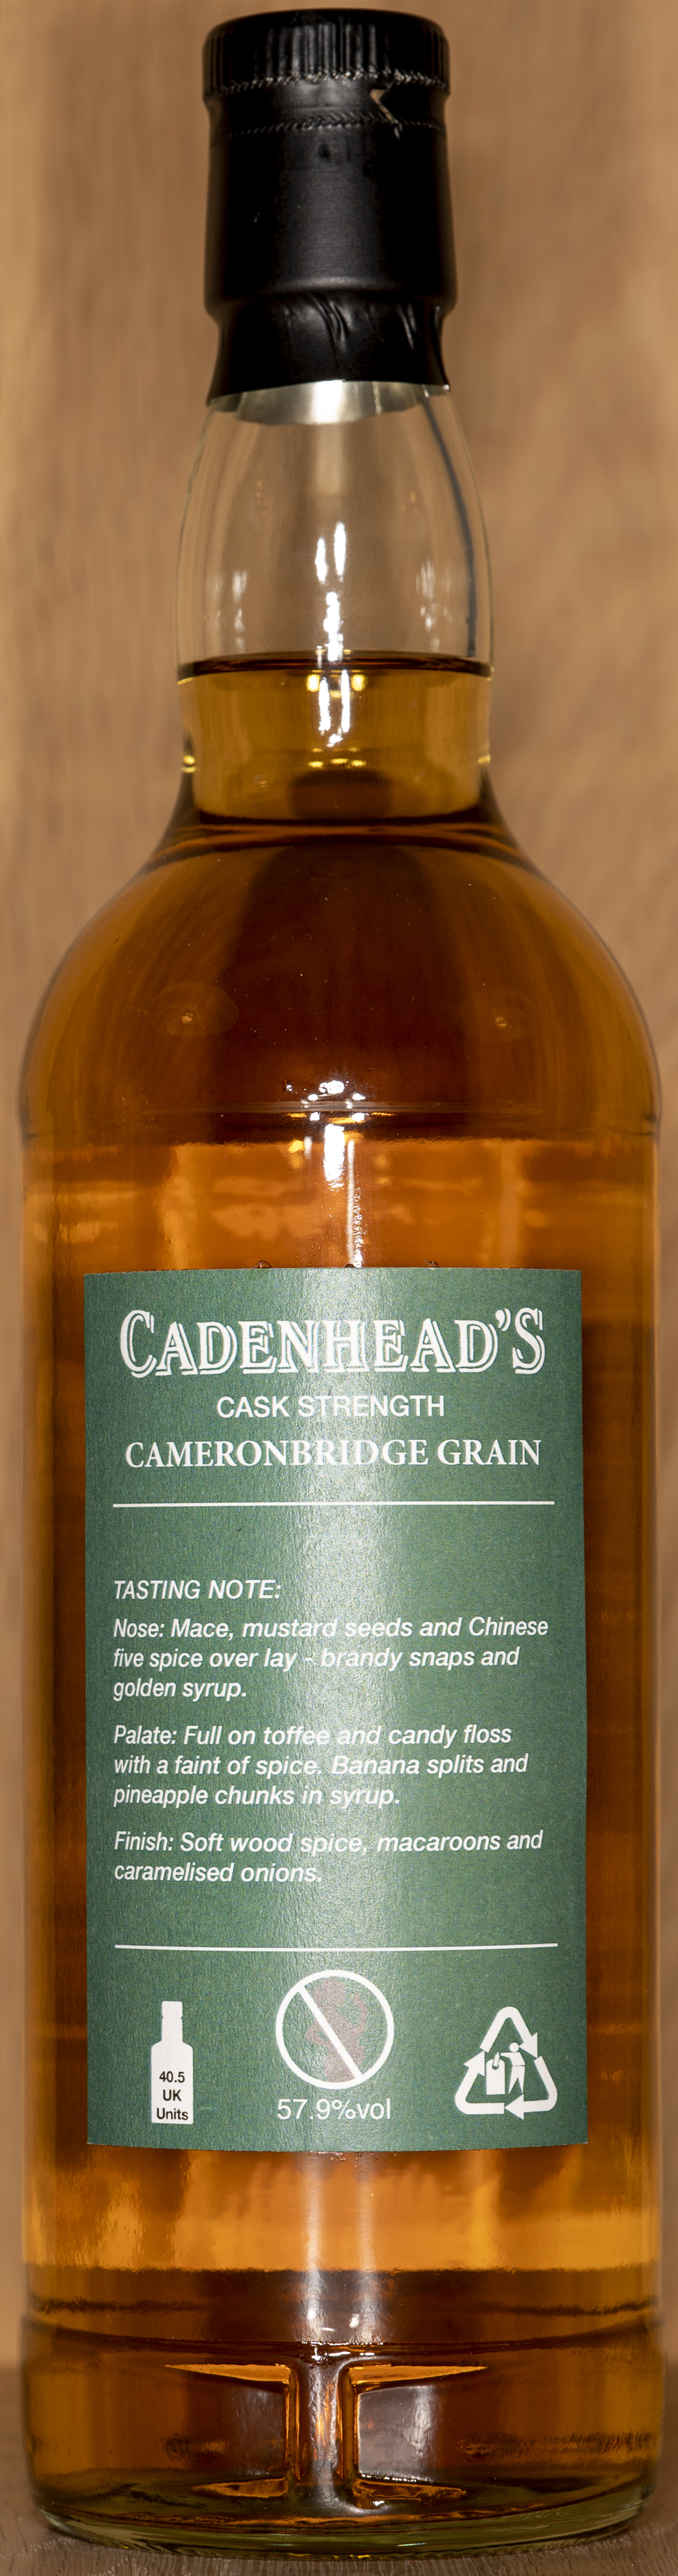 Billede: DSC_5032 - Cadenheads Authentic Collection Cameronbridge 30 - bottle back.jpg